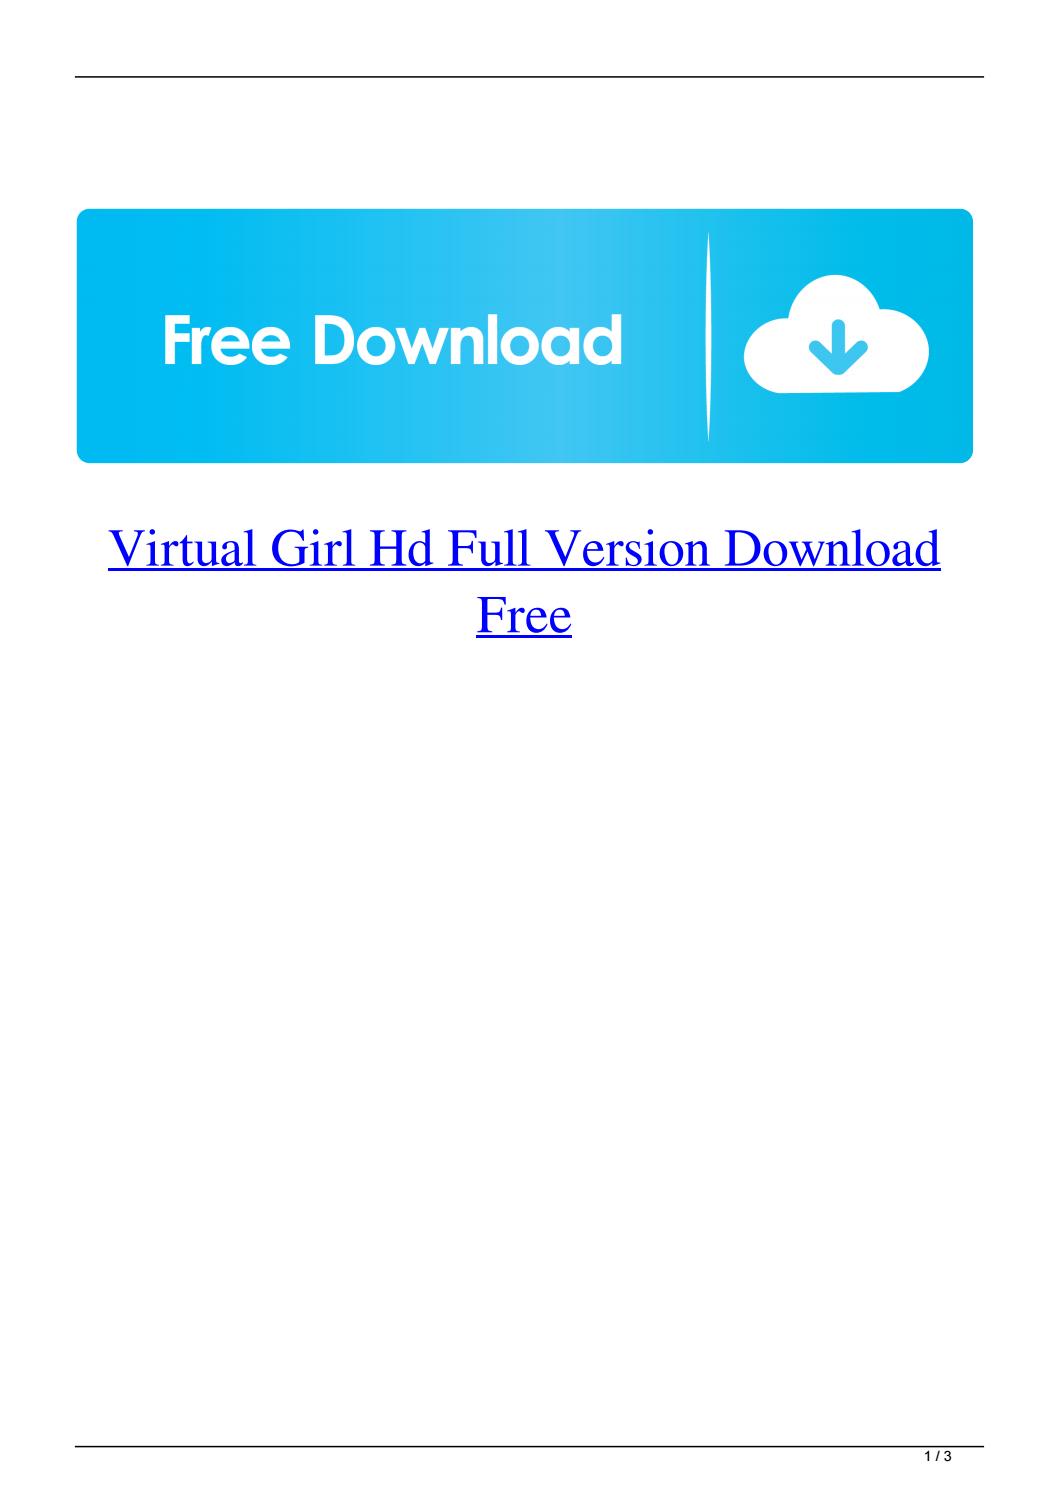 Virtual girl download full movies